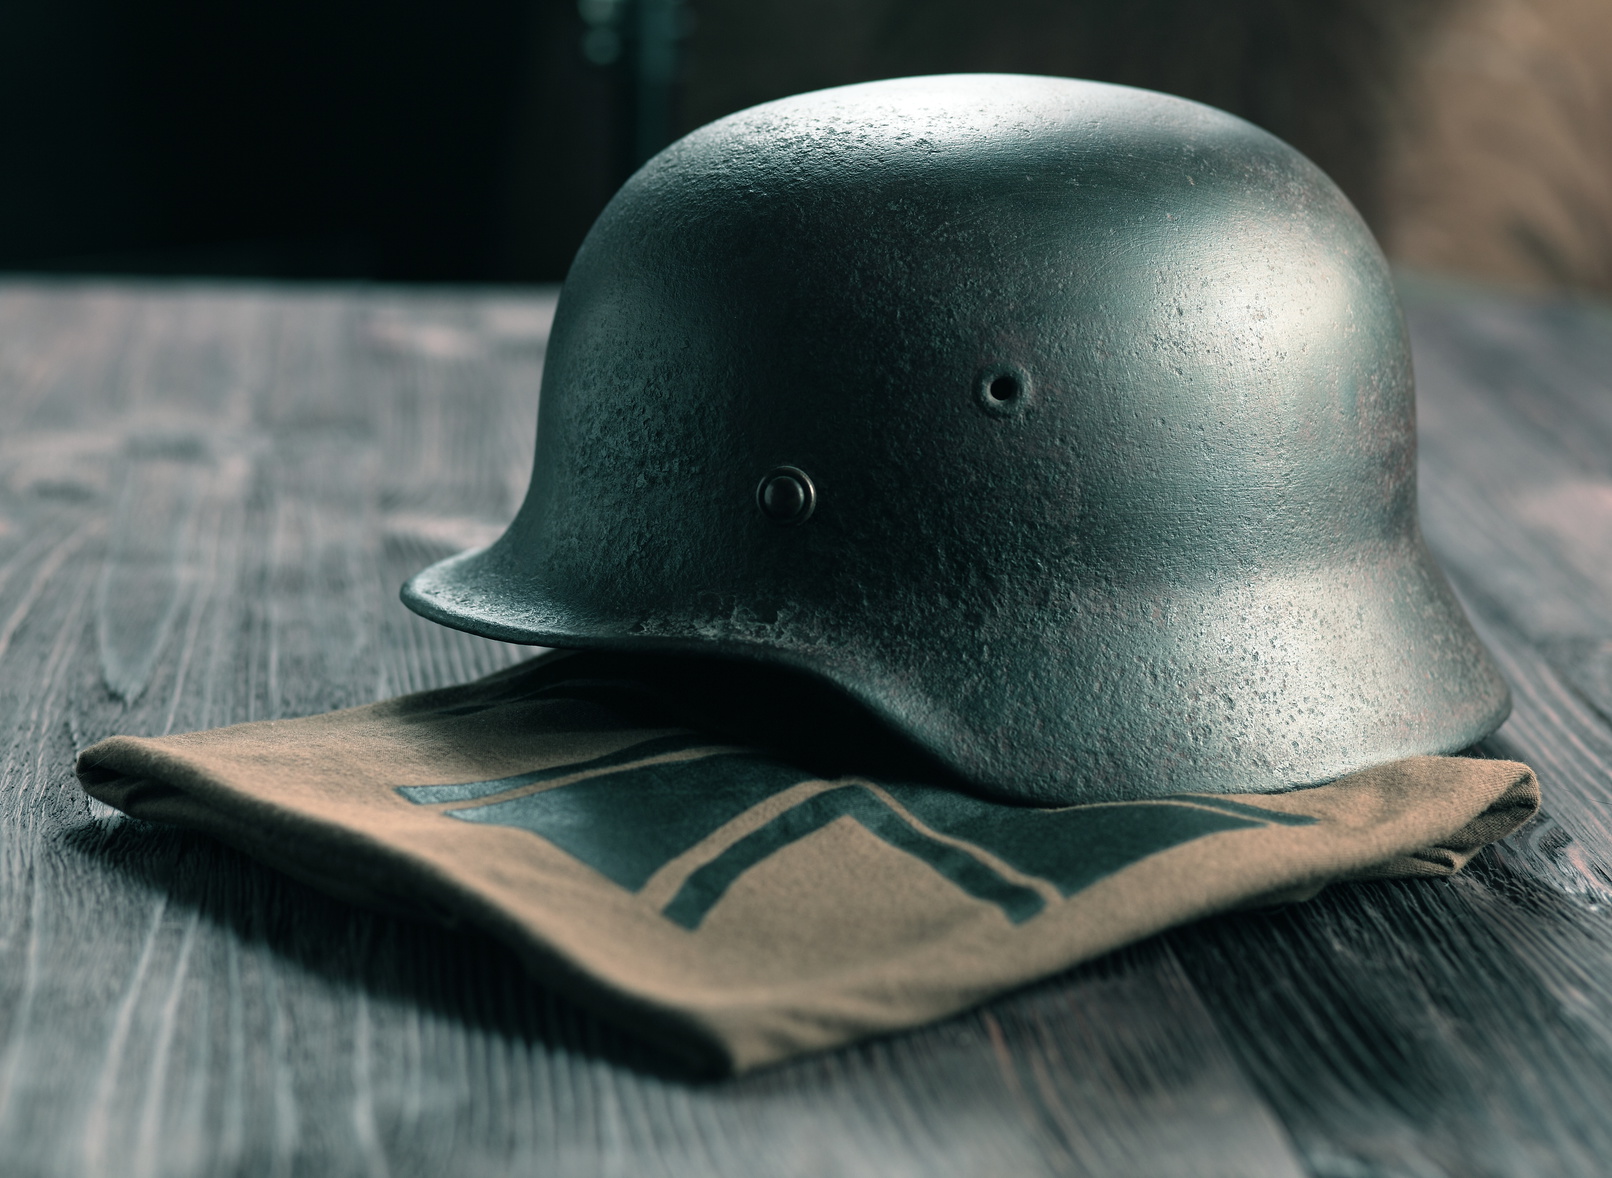 Rusty german army helmet from second world war.